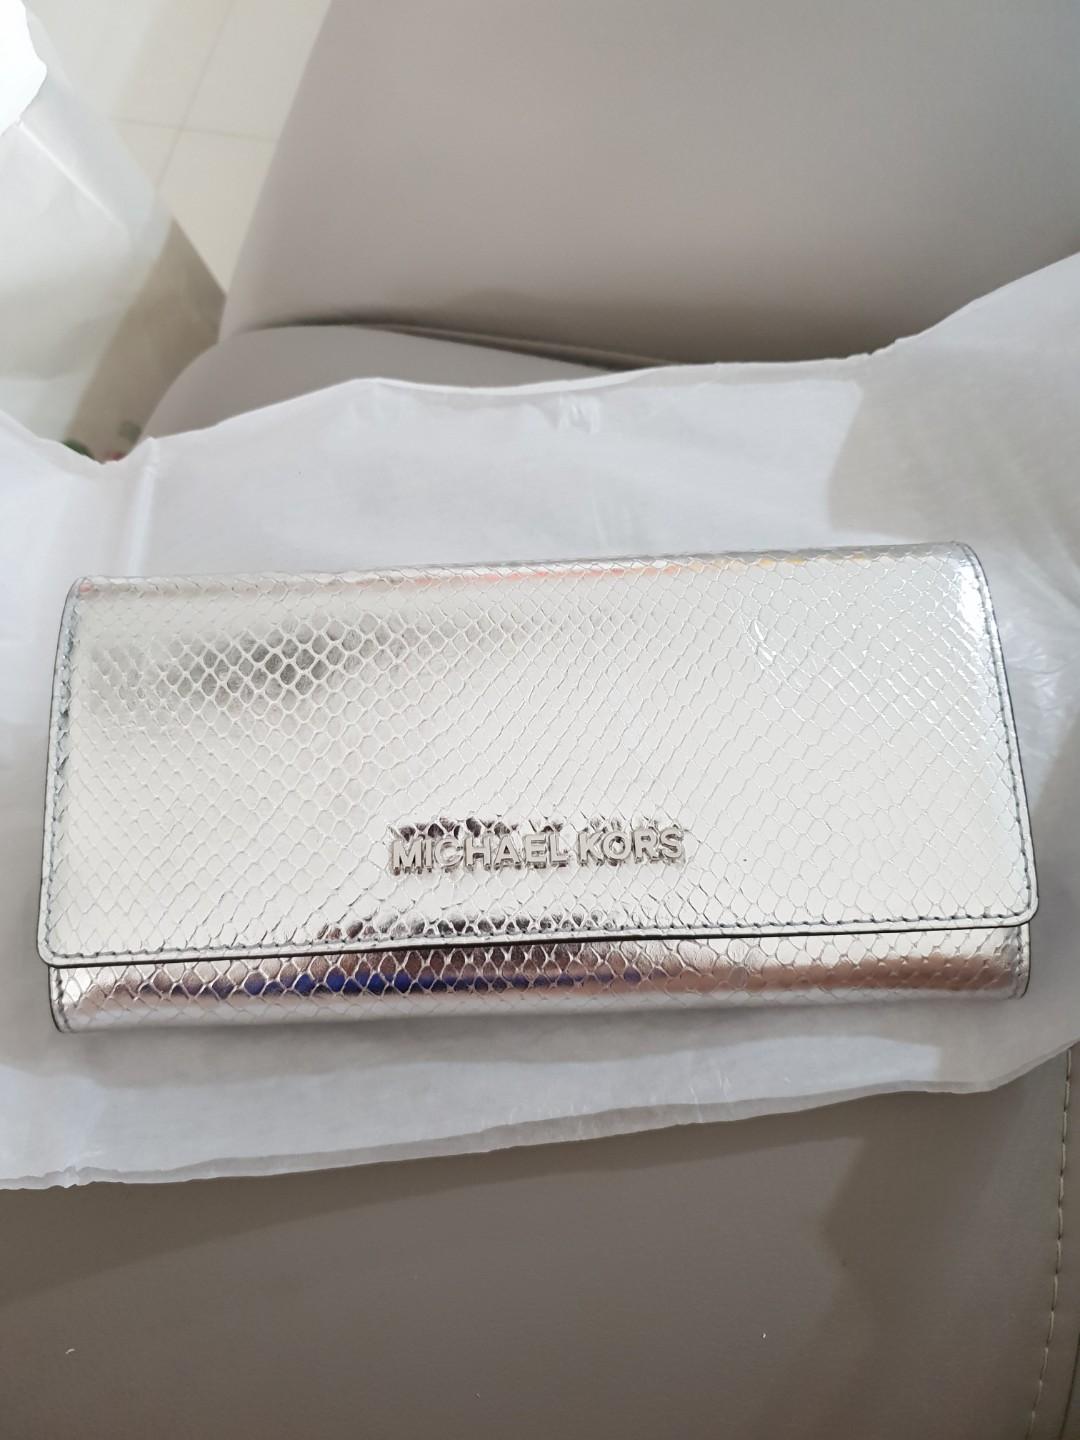 silver mk wallet